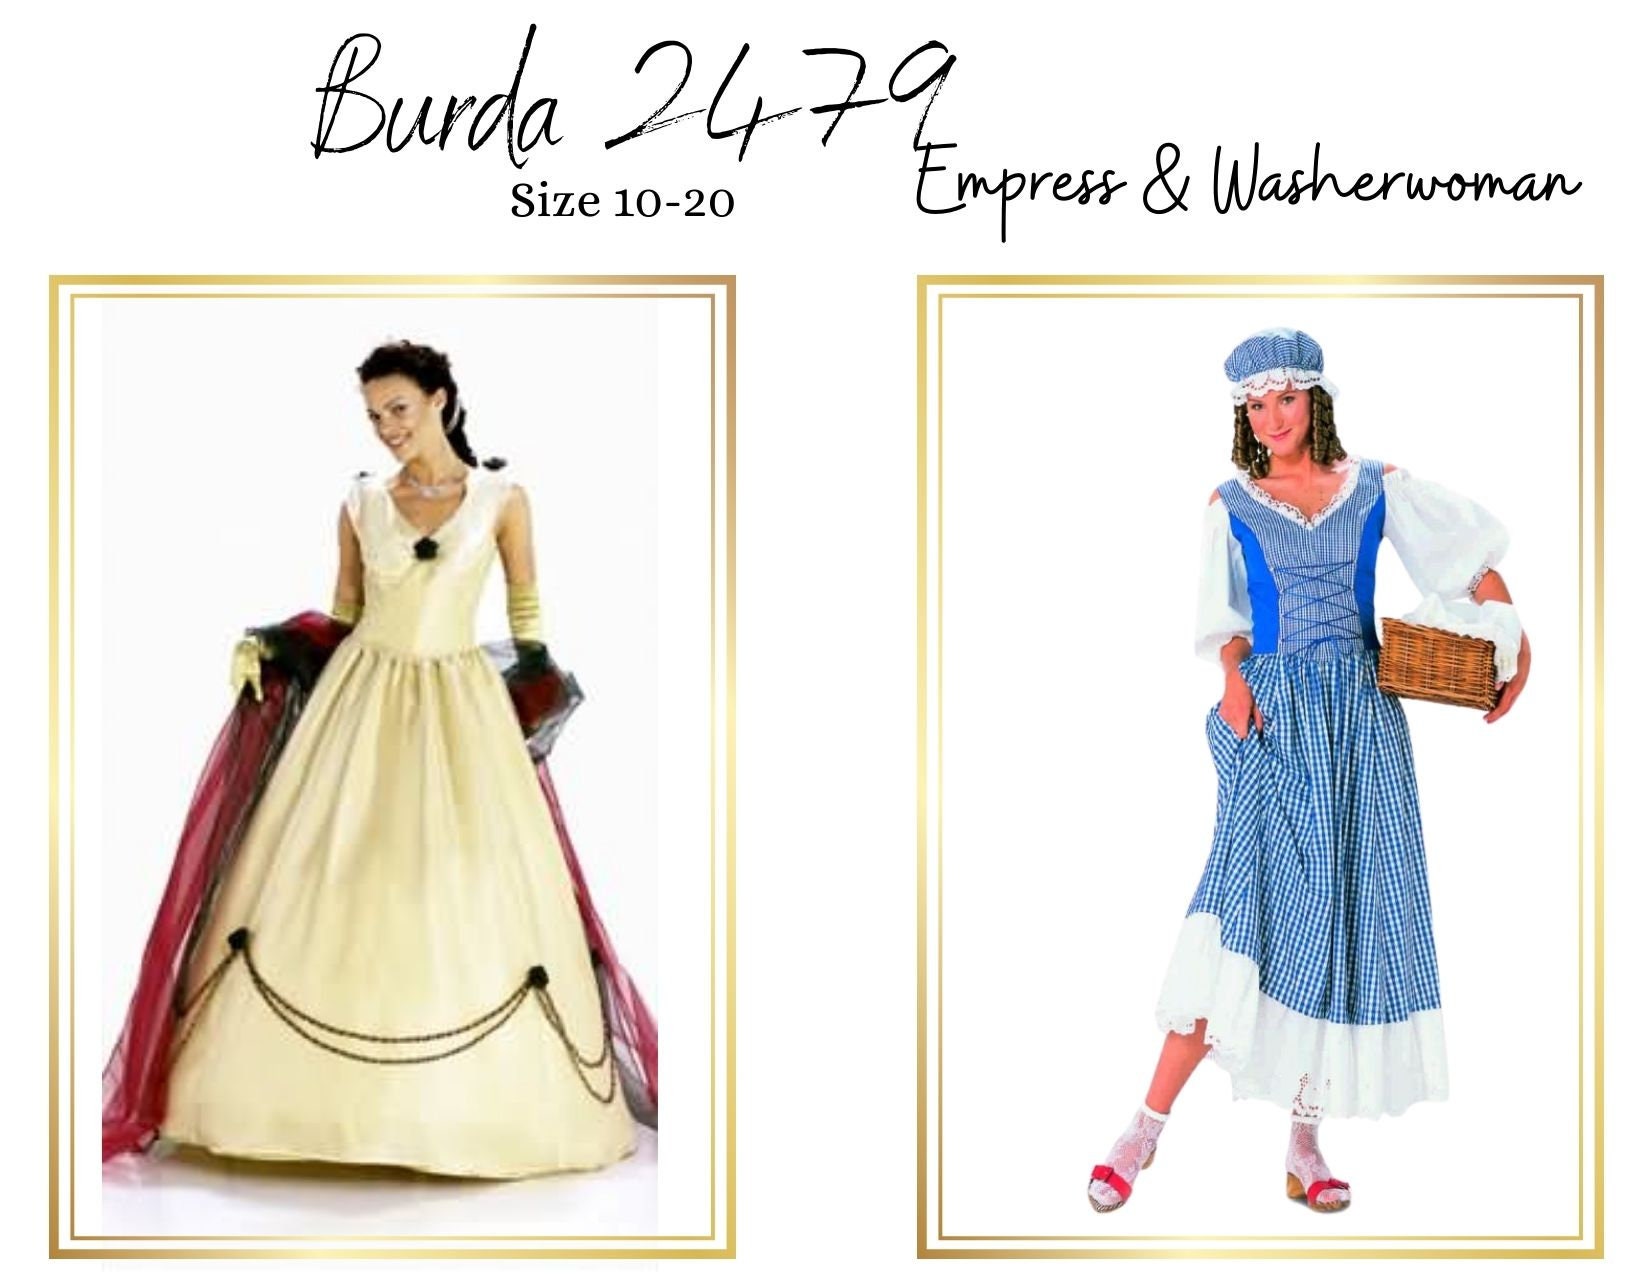 Burda Pattern 2479 Adult Empress & Washer Woman Costume